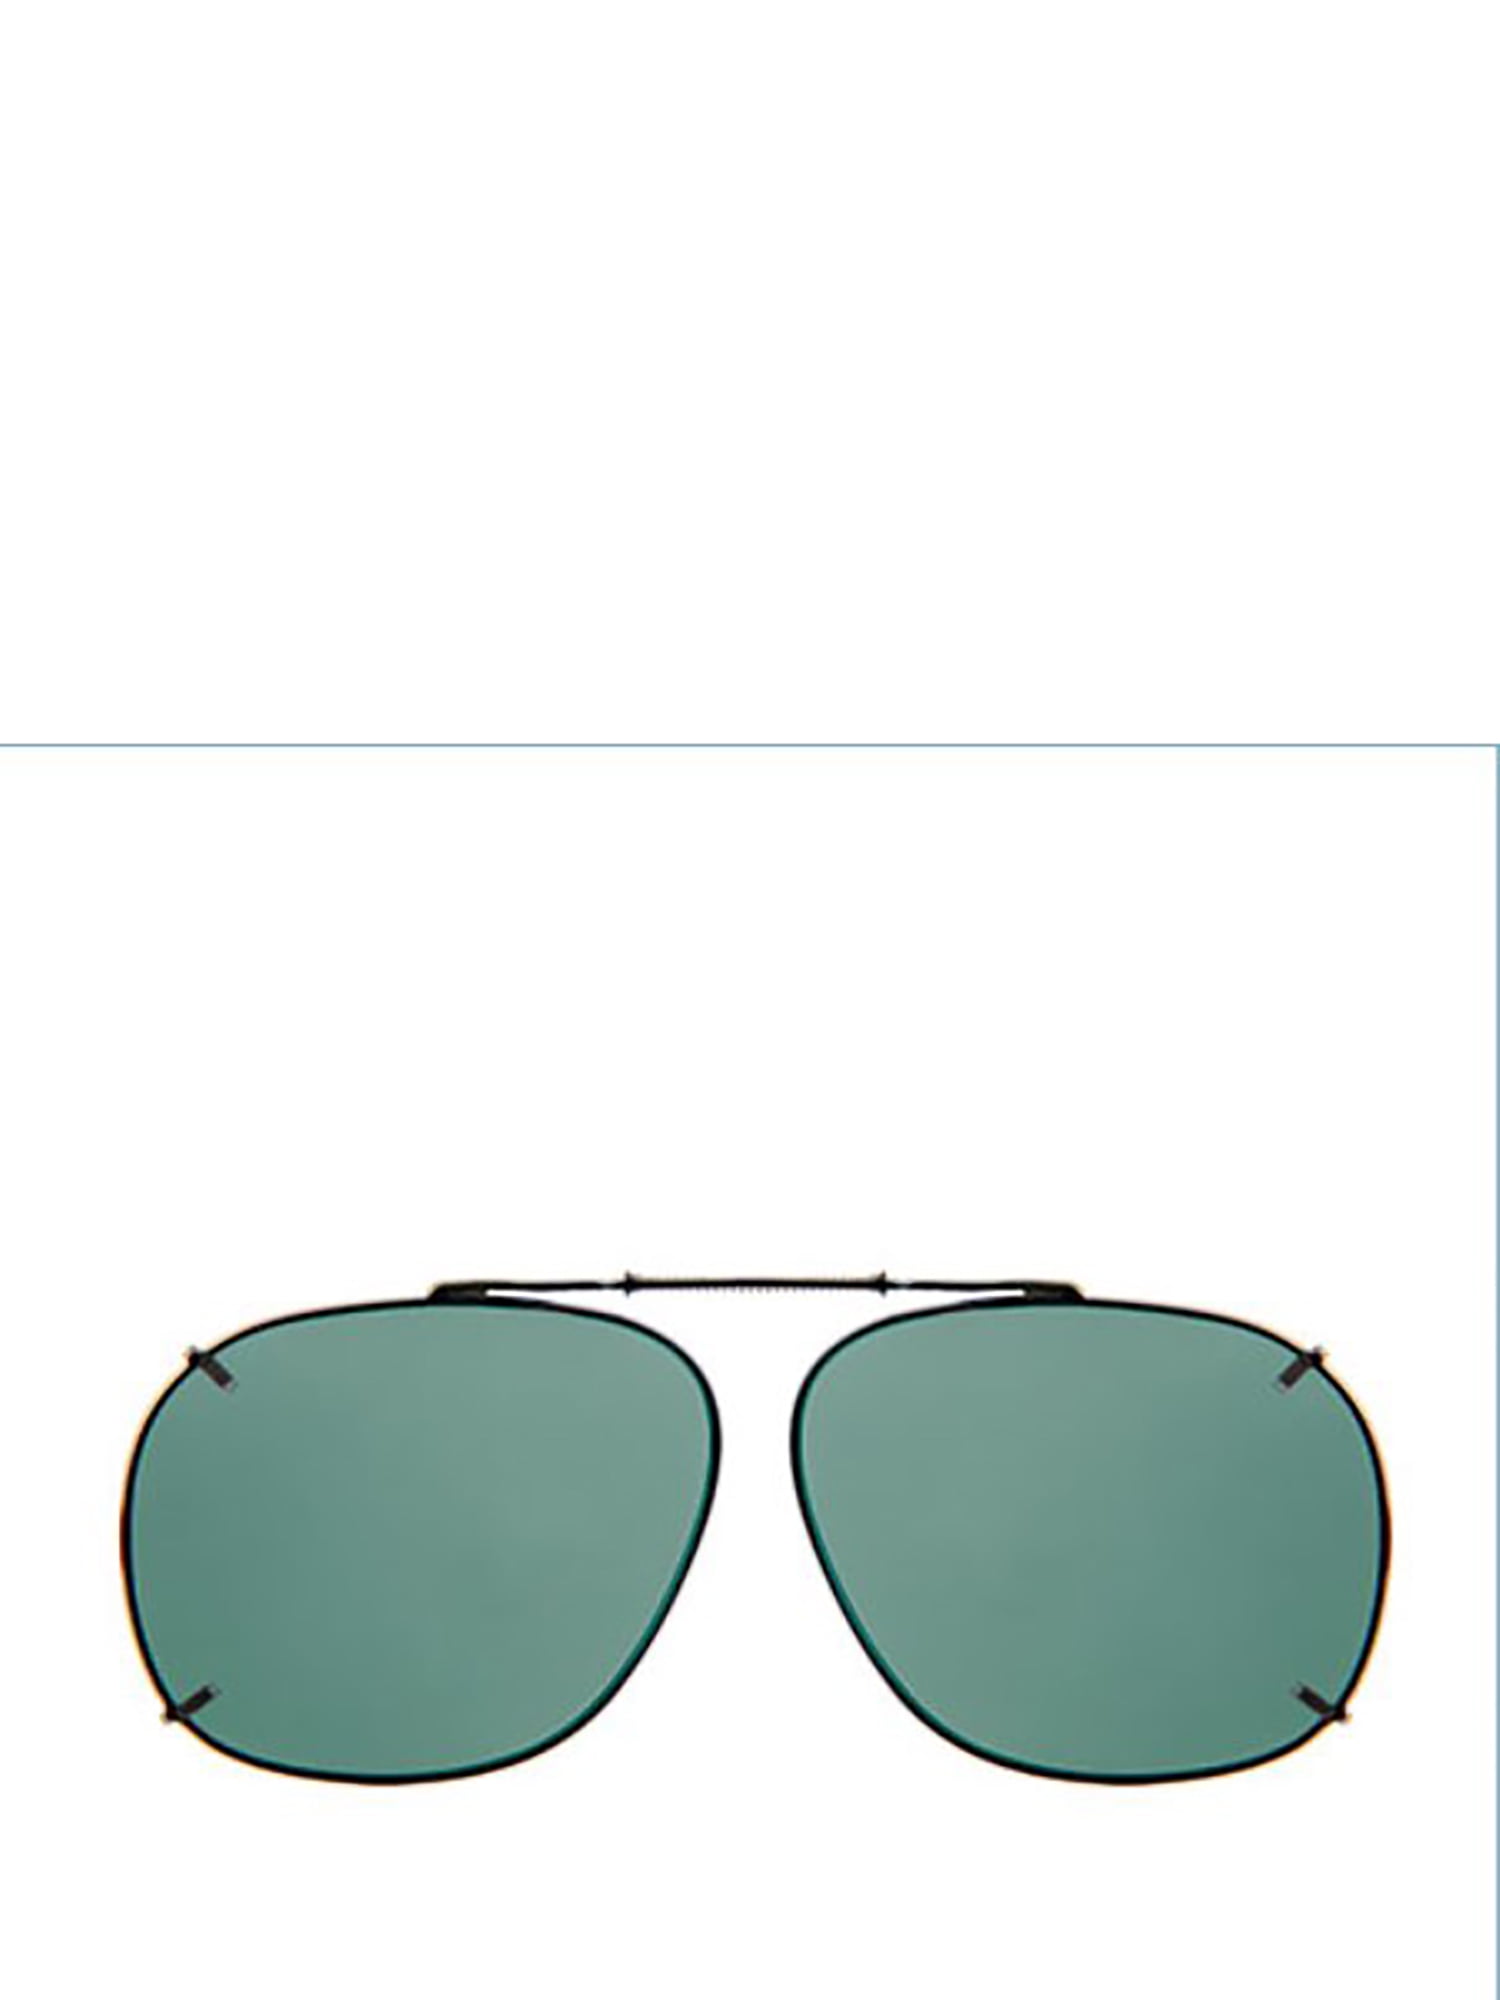 Solar Shield Clip On Sunglasses Size Chart